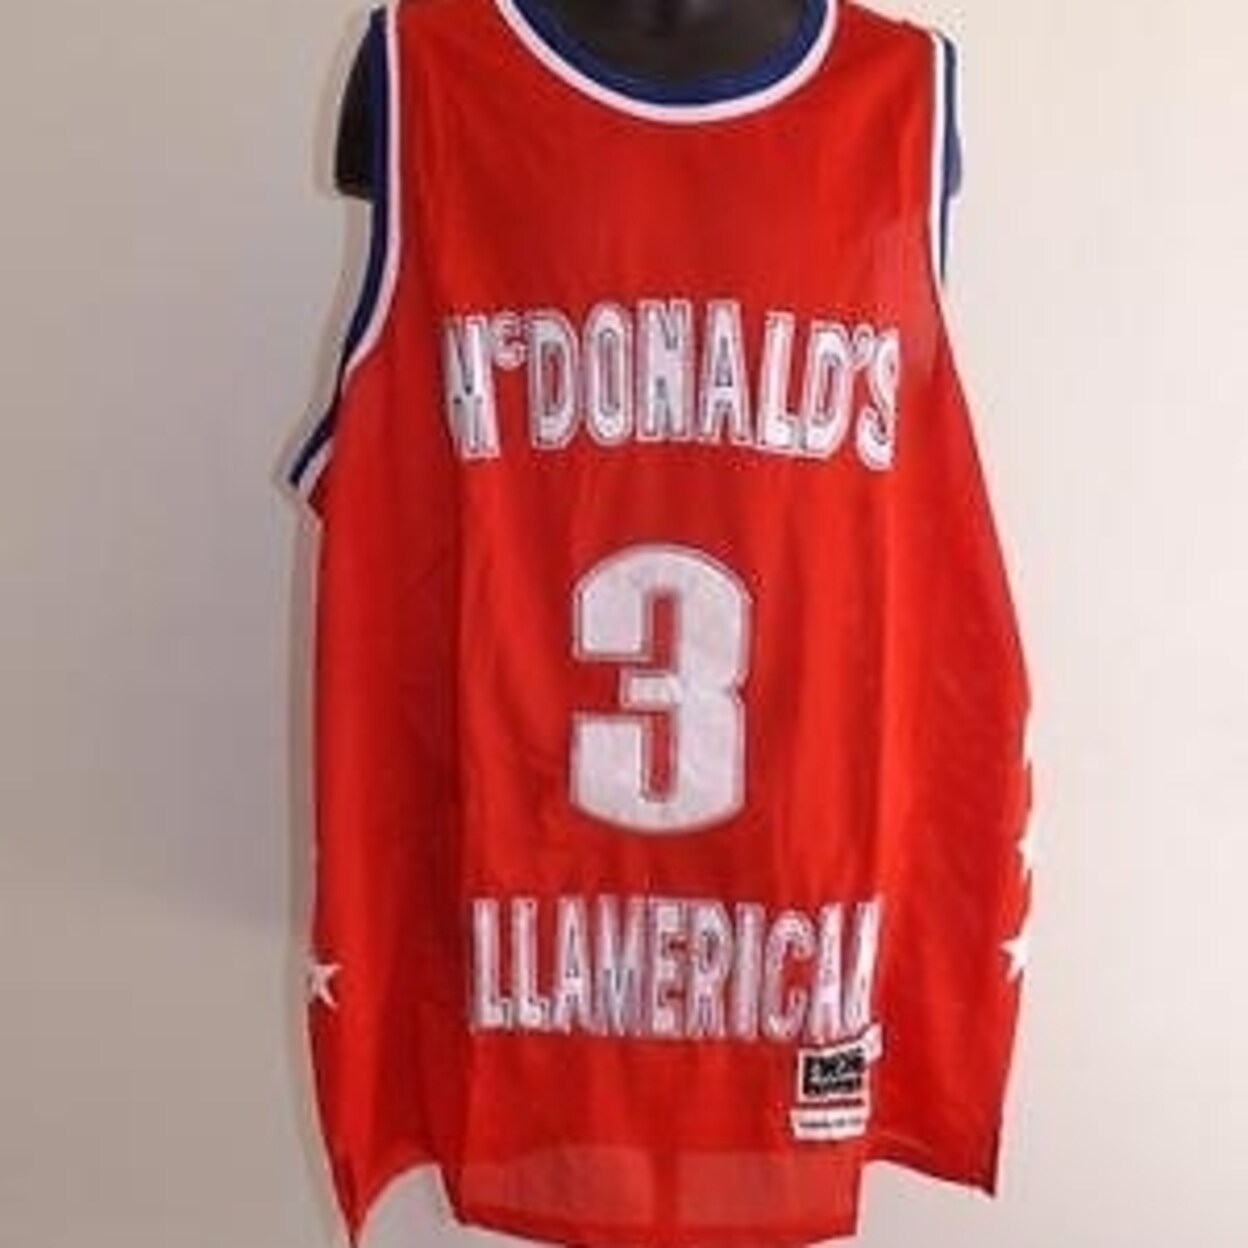 mcdonald's all american jersey